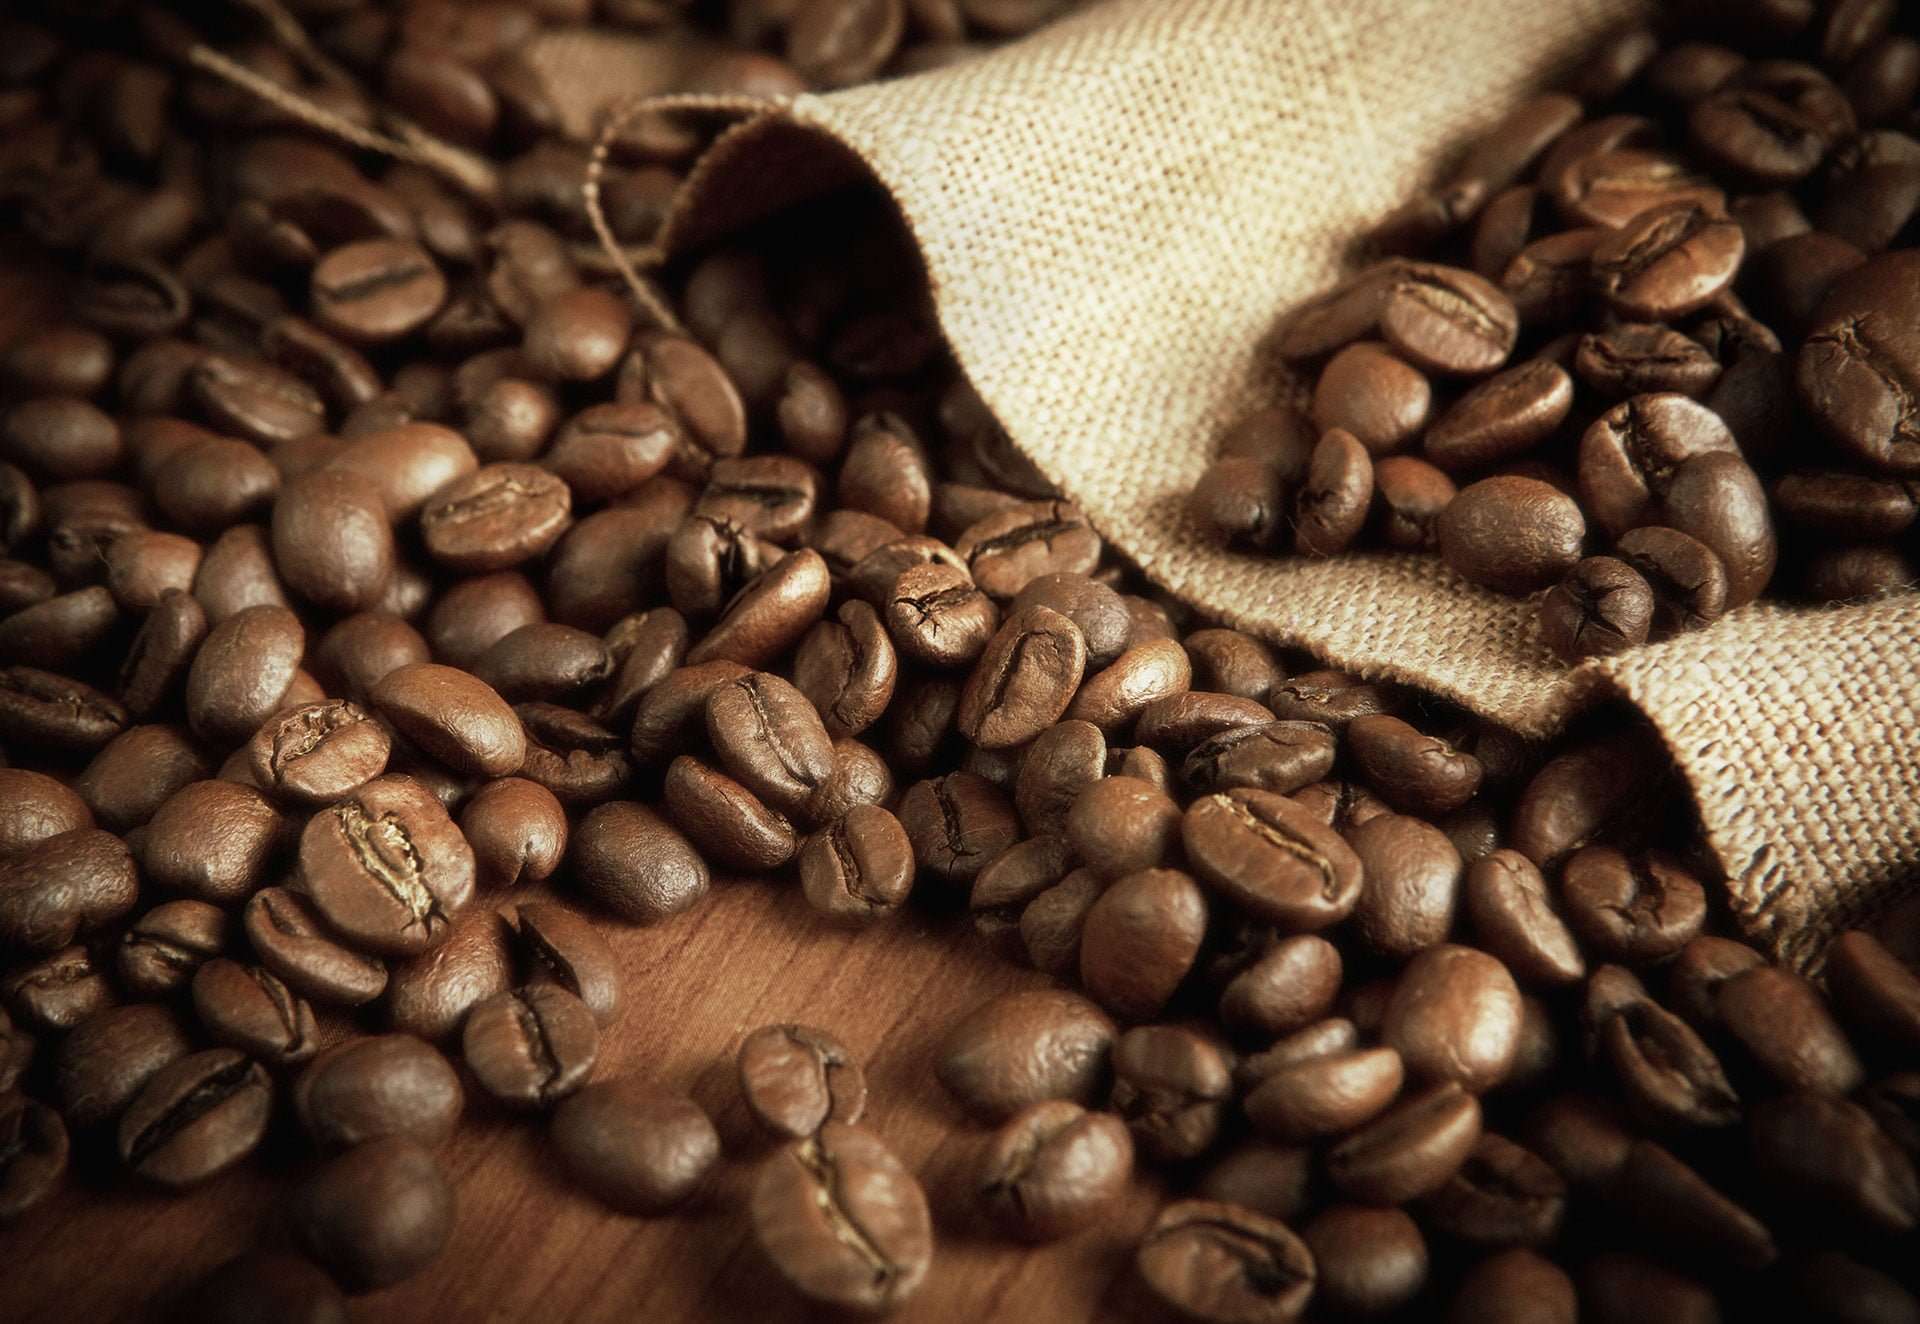 High quality coffee beans